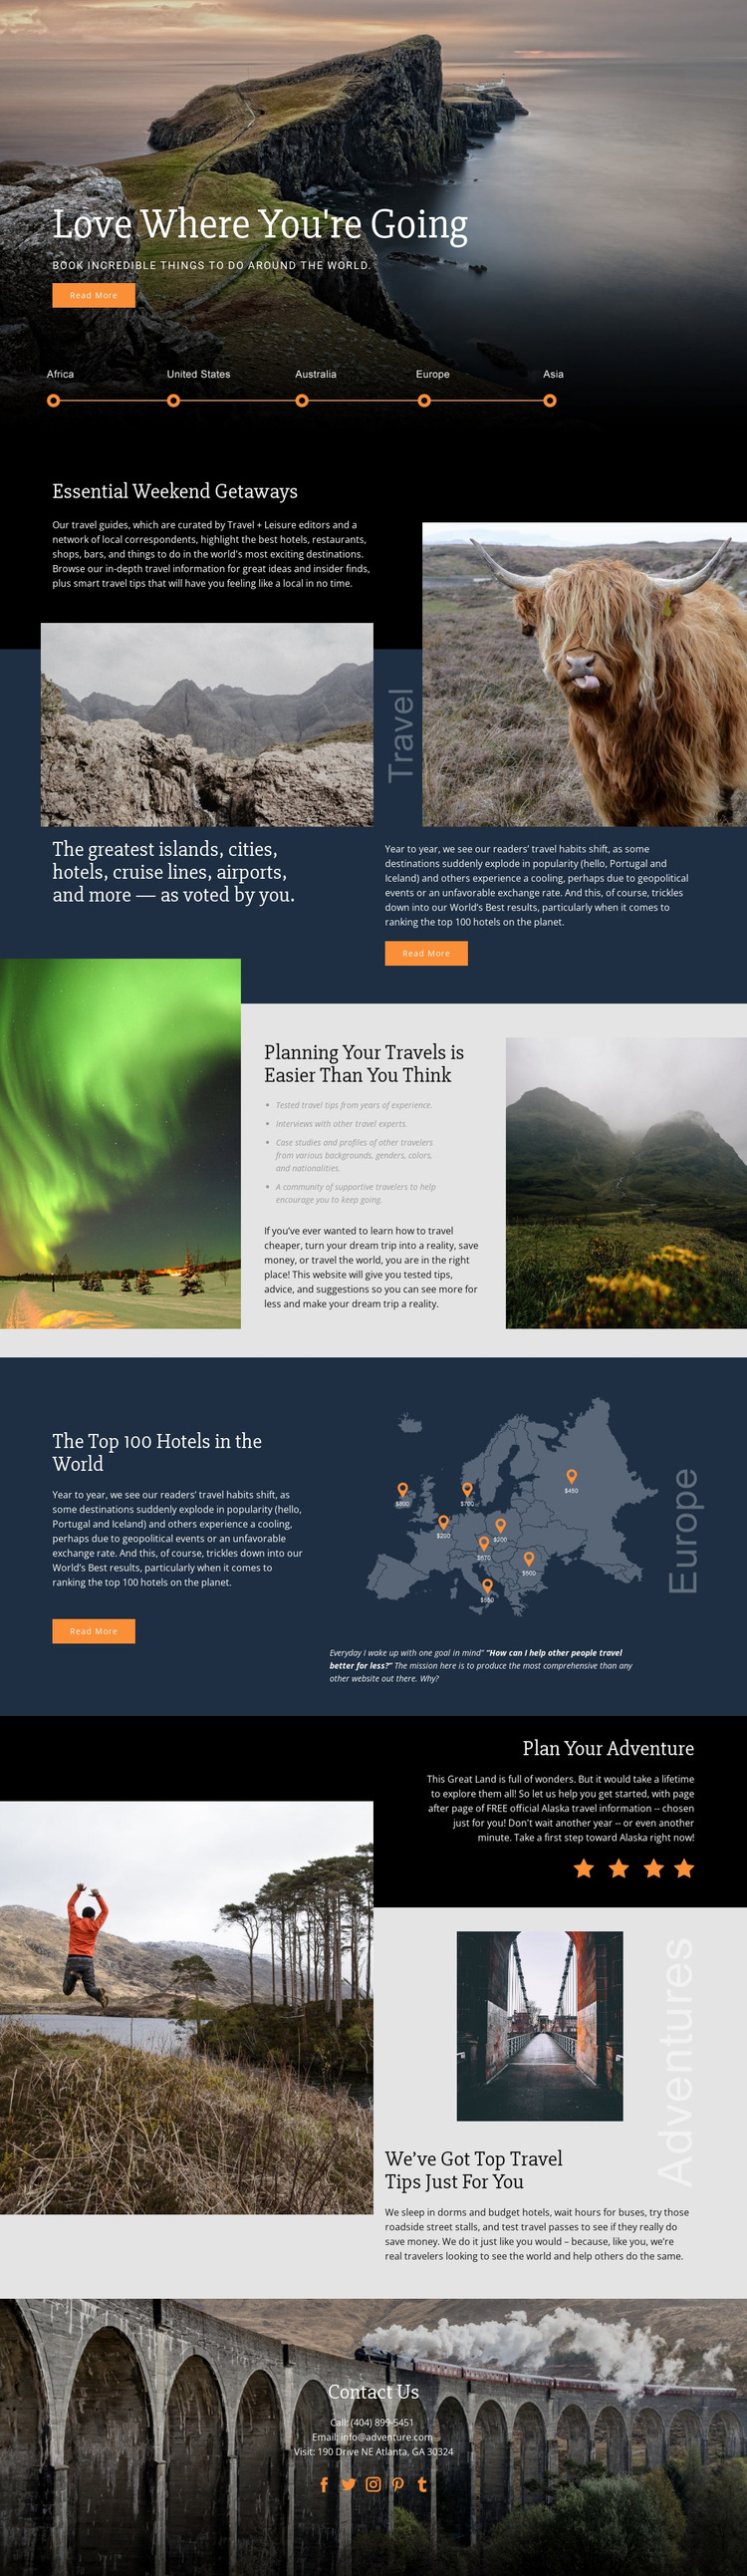 Planning Your Travel Website Mockup